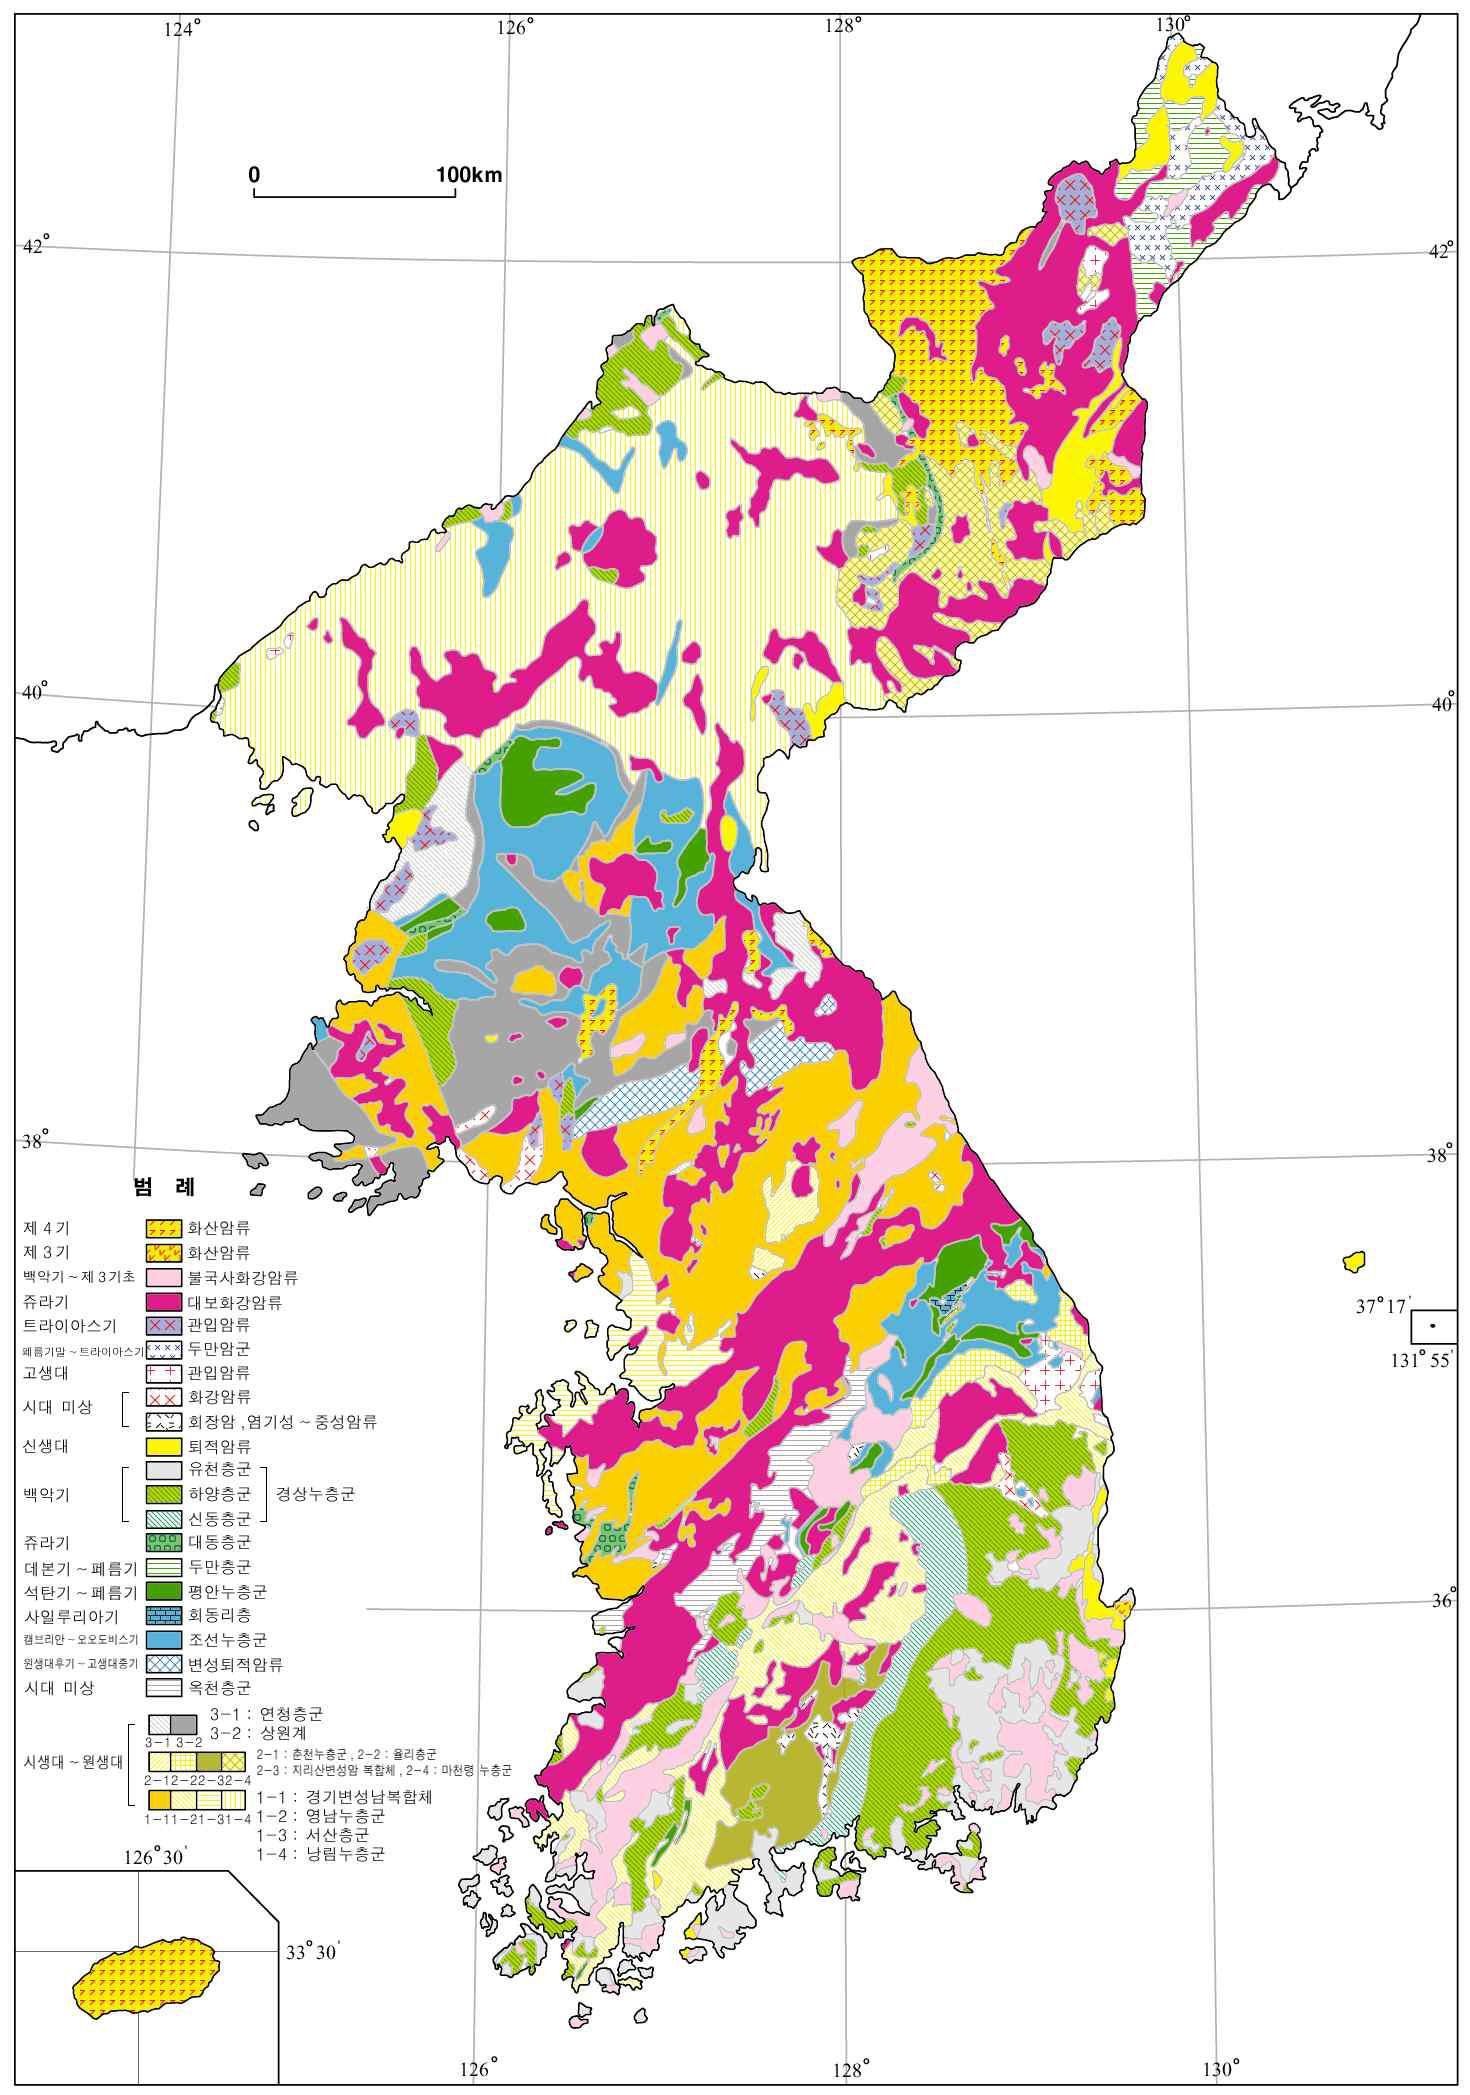 Geologic map of Korea.